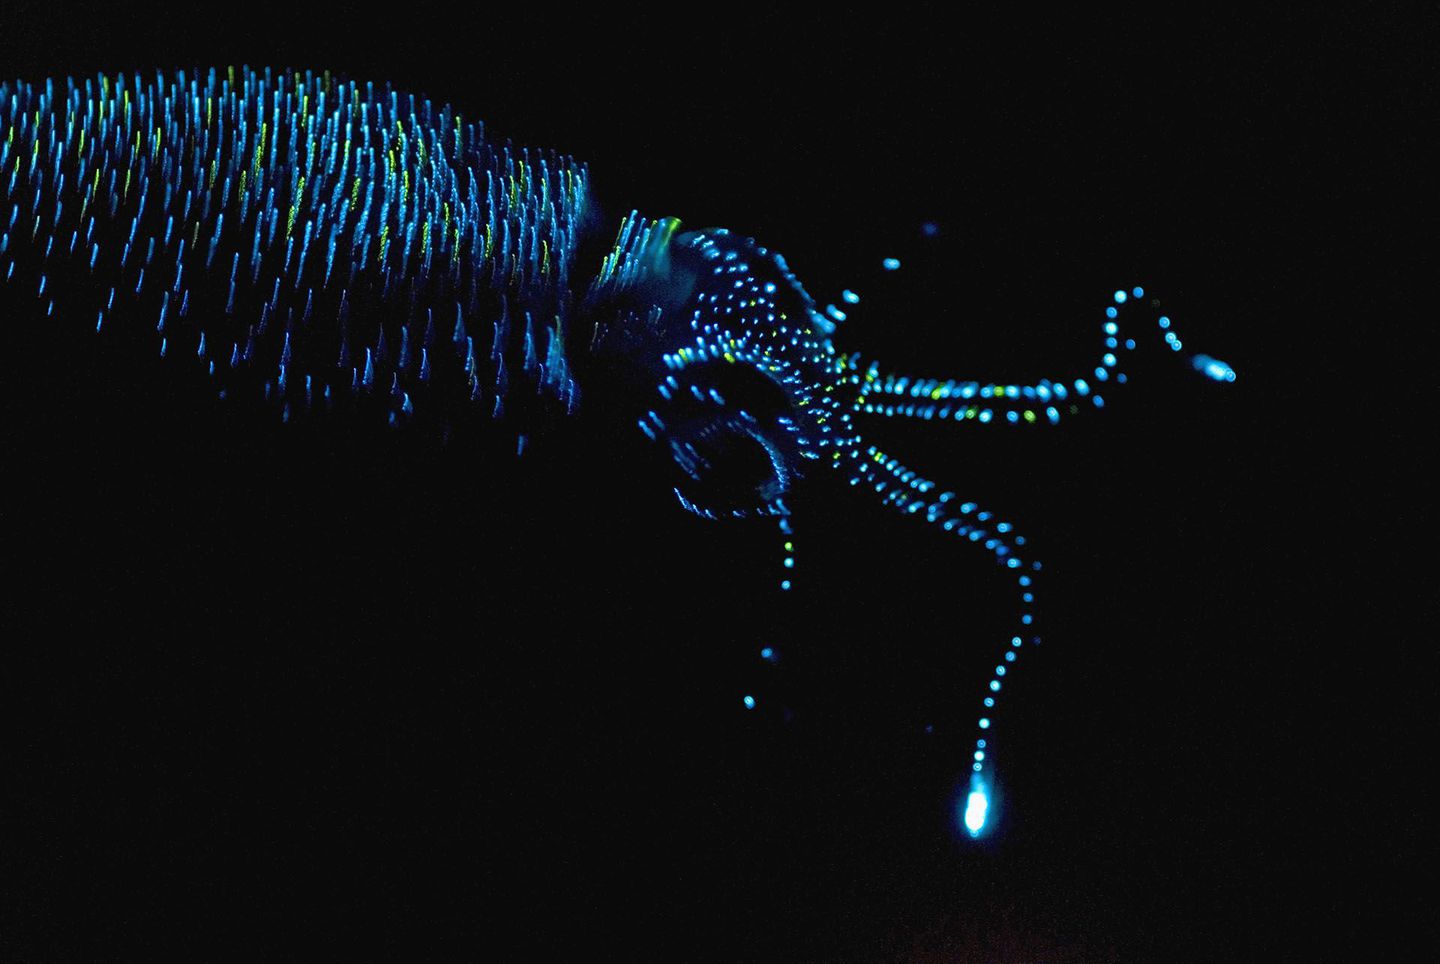 http-%2f%2fmashable-com%2fwp-content%2fgallery%2fbioluminescent-sea-creatures%2f42-36660459